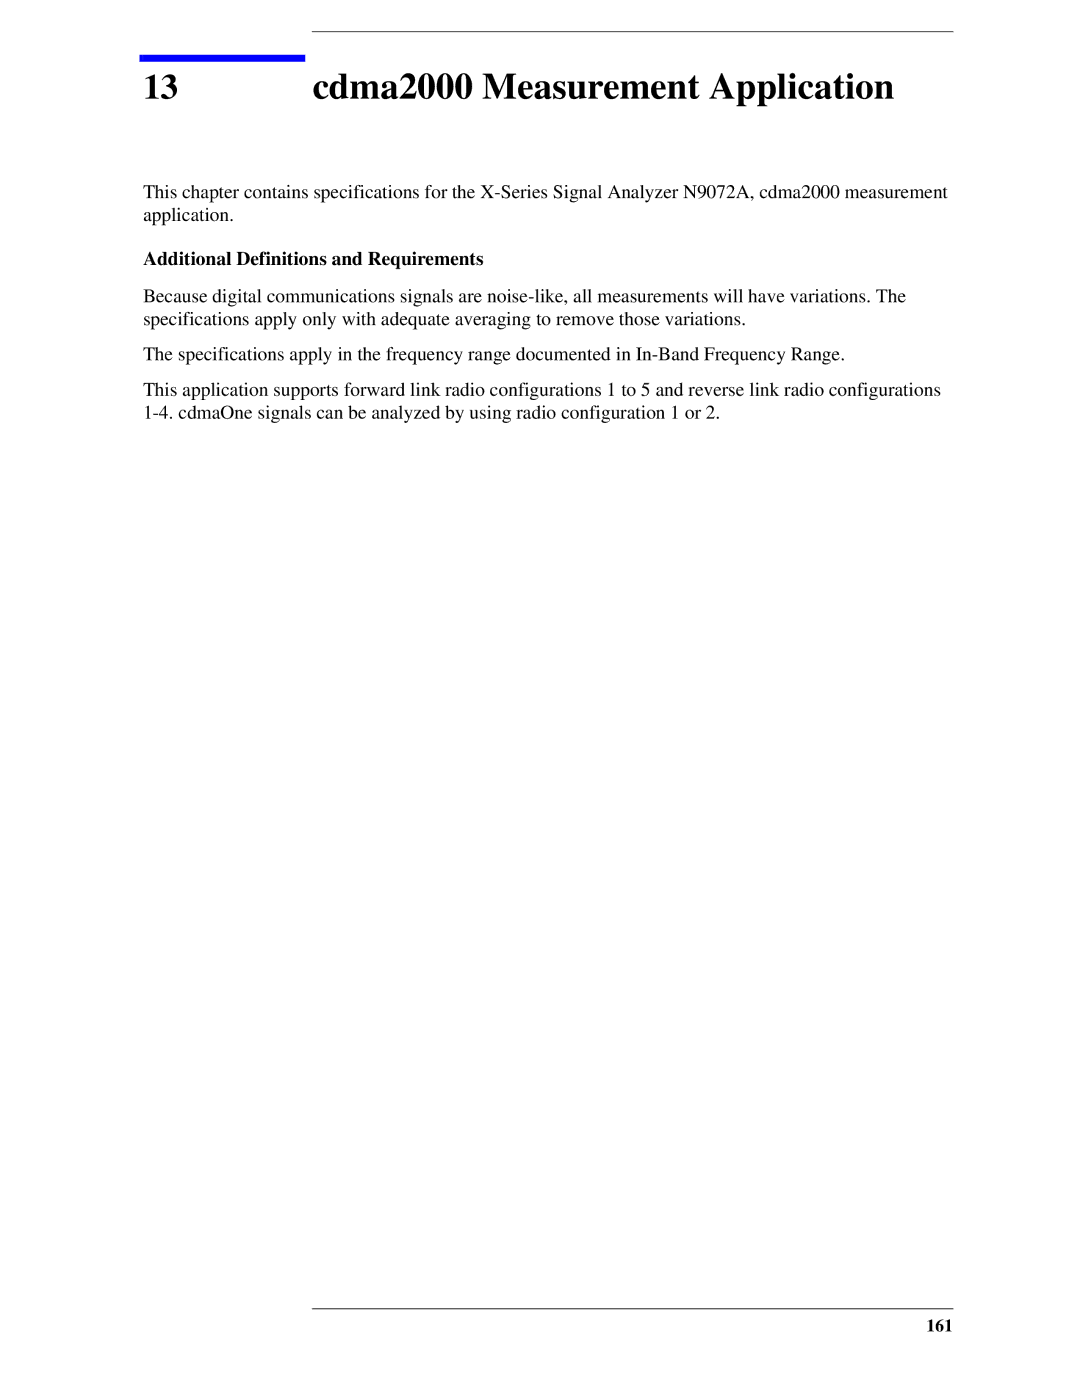 Agilent Technologies N9010A specifications Cdma2000 Measurement Application, 161 